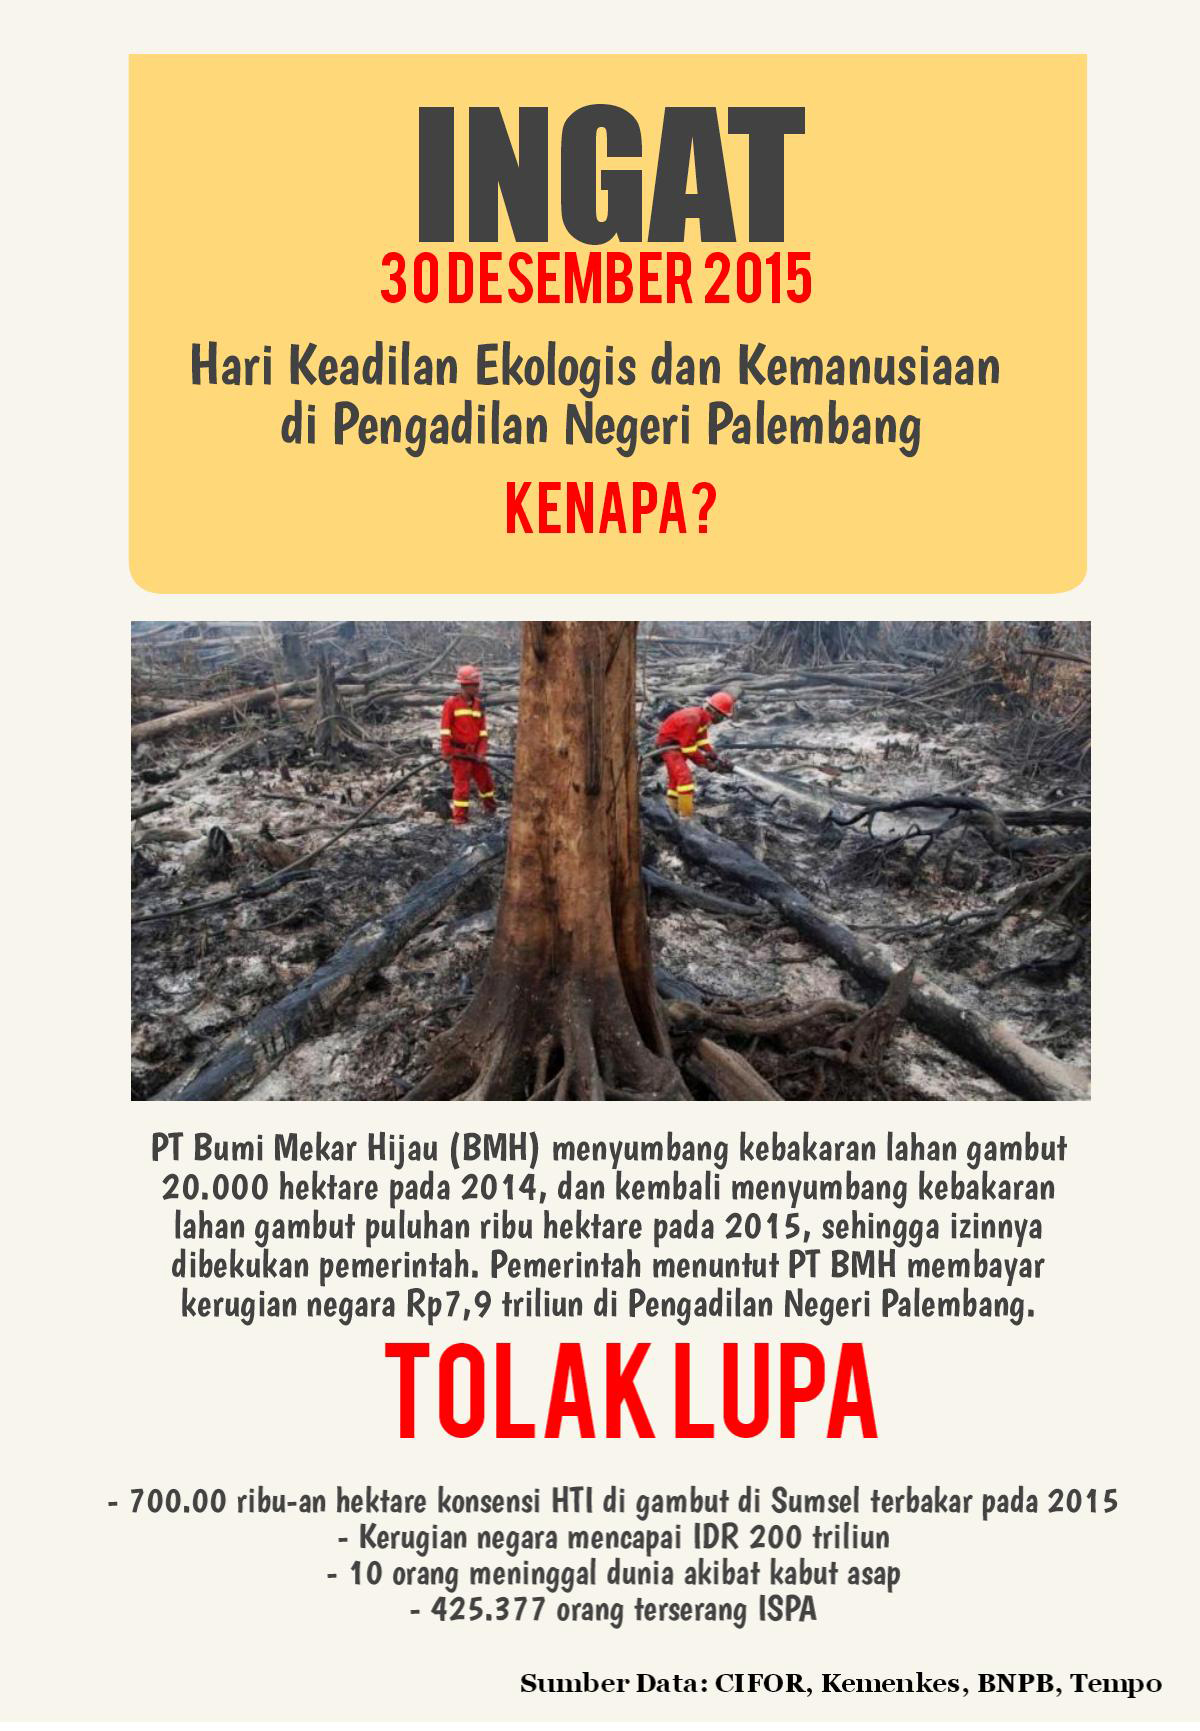 Poster tolak lupa terhadap persoalan PT. BMH. Akankah keadilan ekologis ditegakkan di Pengadilan Negeri Palembang pada 30 Desember 2015? Sumber: Facebook Made Ali